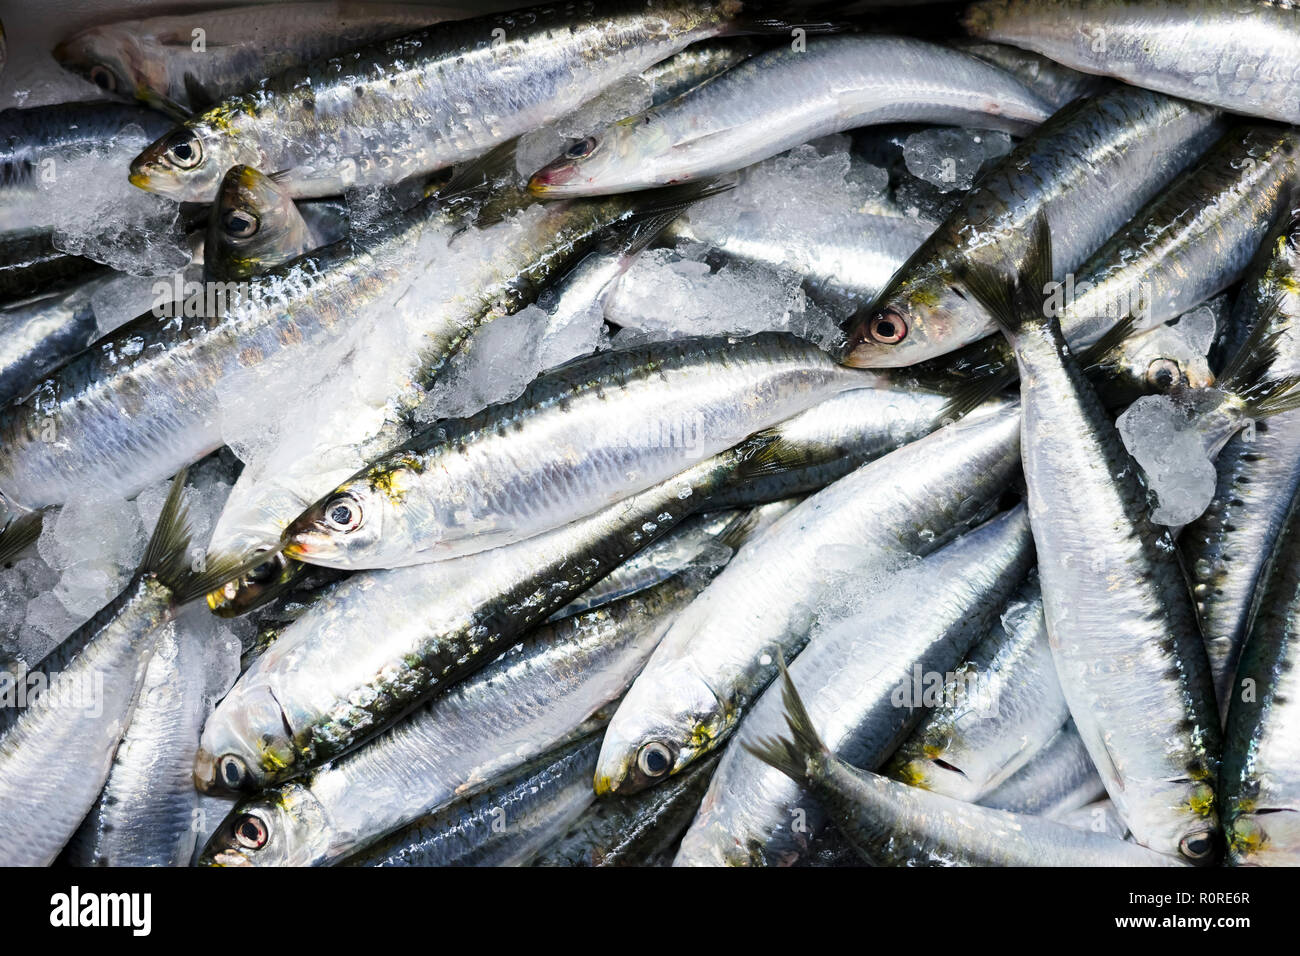 Many small sardines on ice, Polen Stock Photo